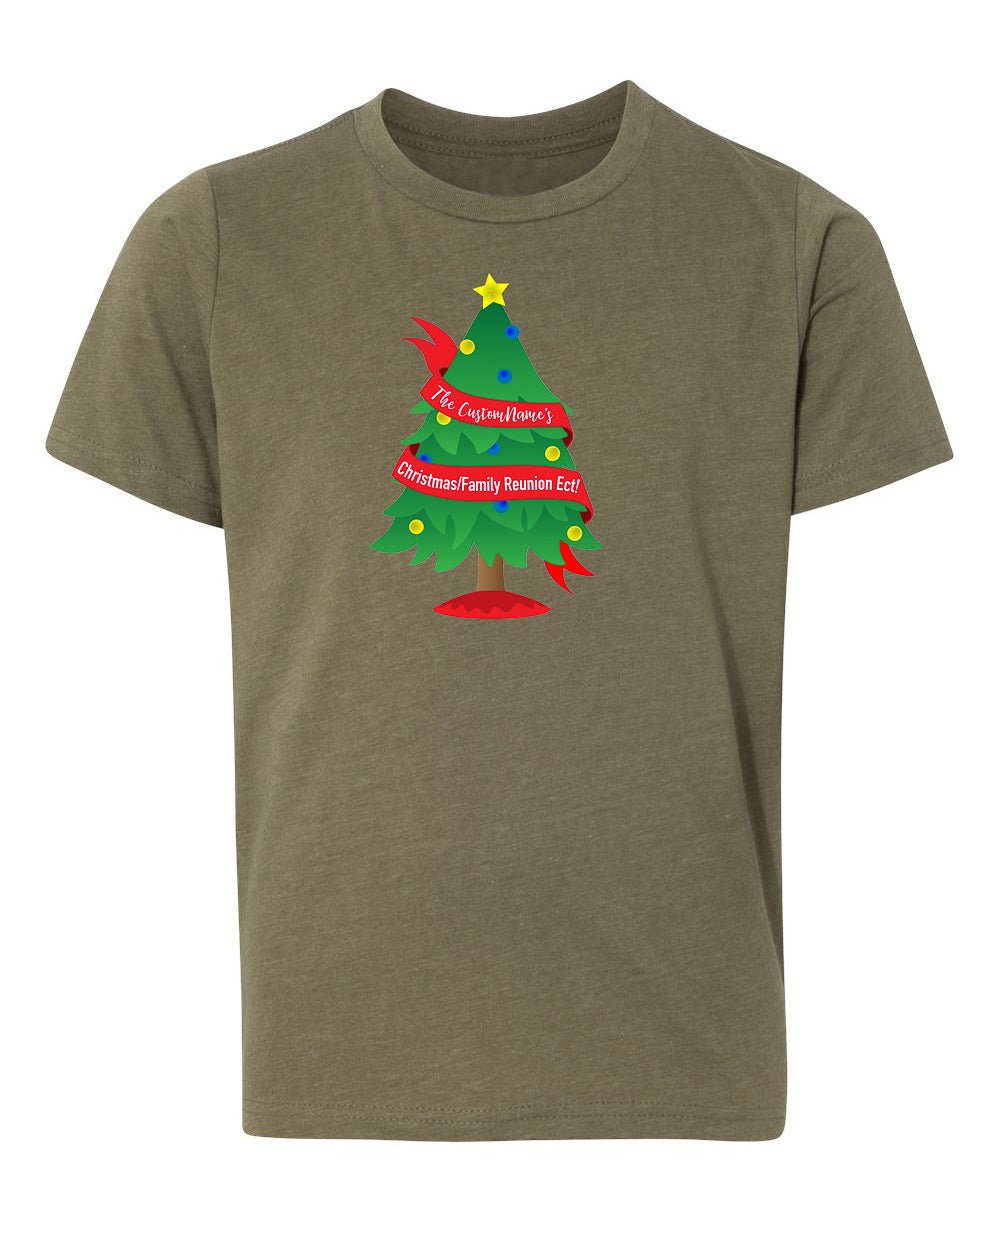 Tree Banner - The Custom Name's Christmas/Family Reunion Kids T Shirts - Mato & Hash